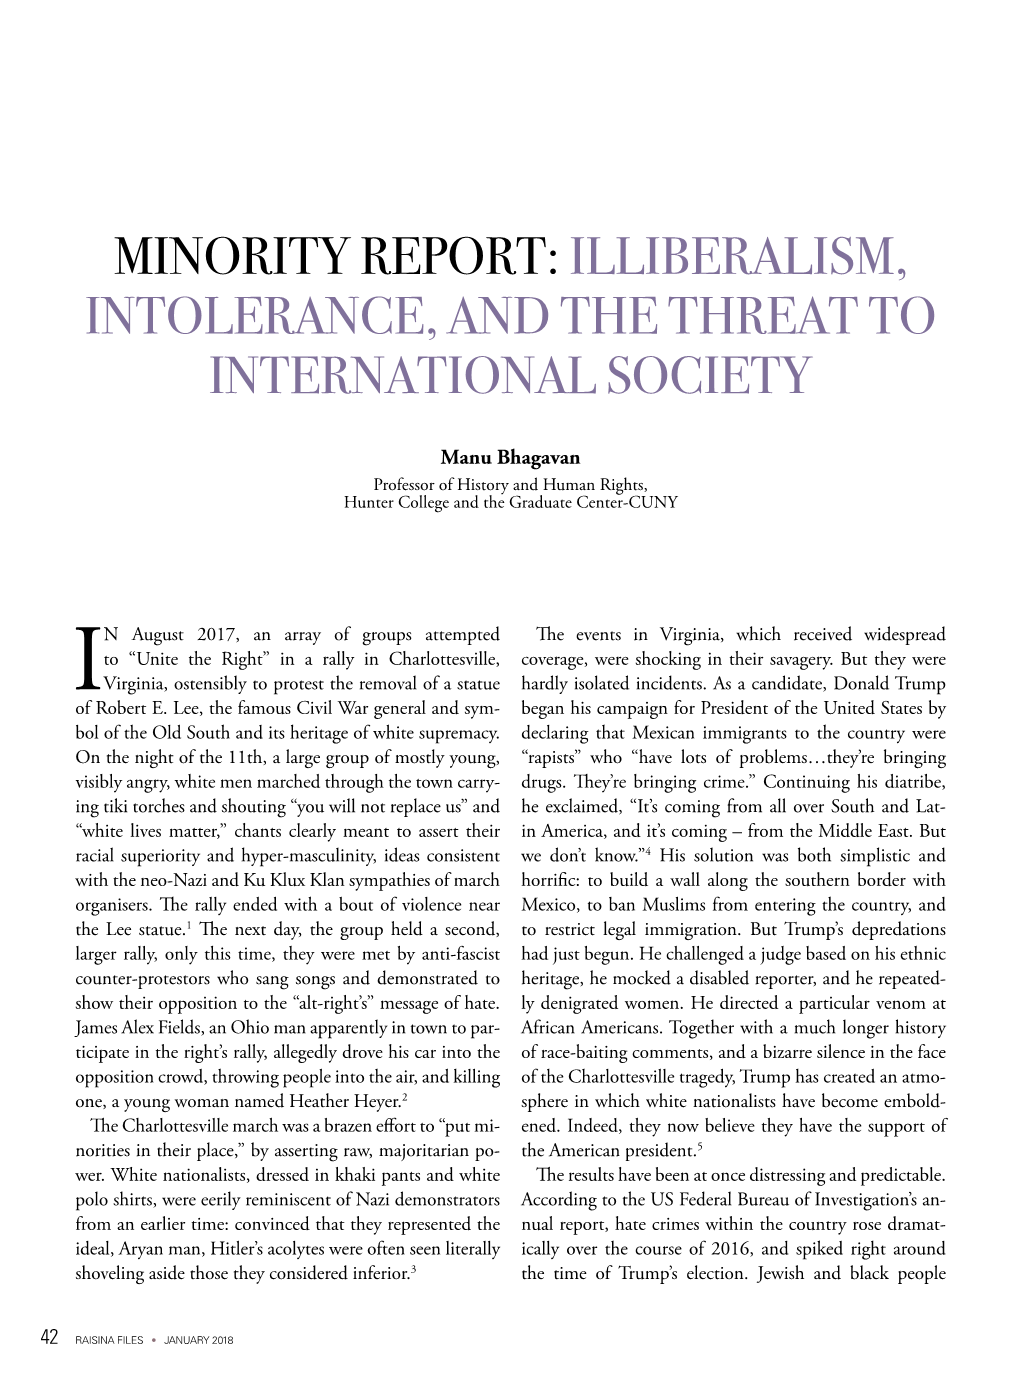 Minority Report: Illiberalism, Intolerance, and the Threat to International Society